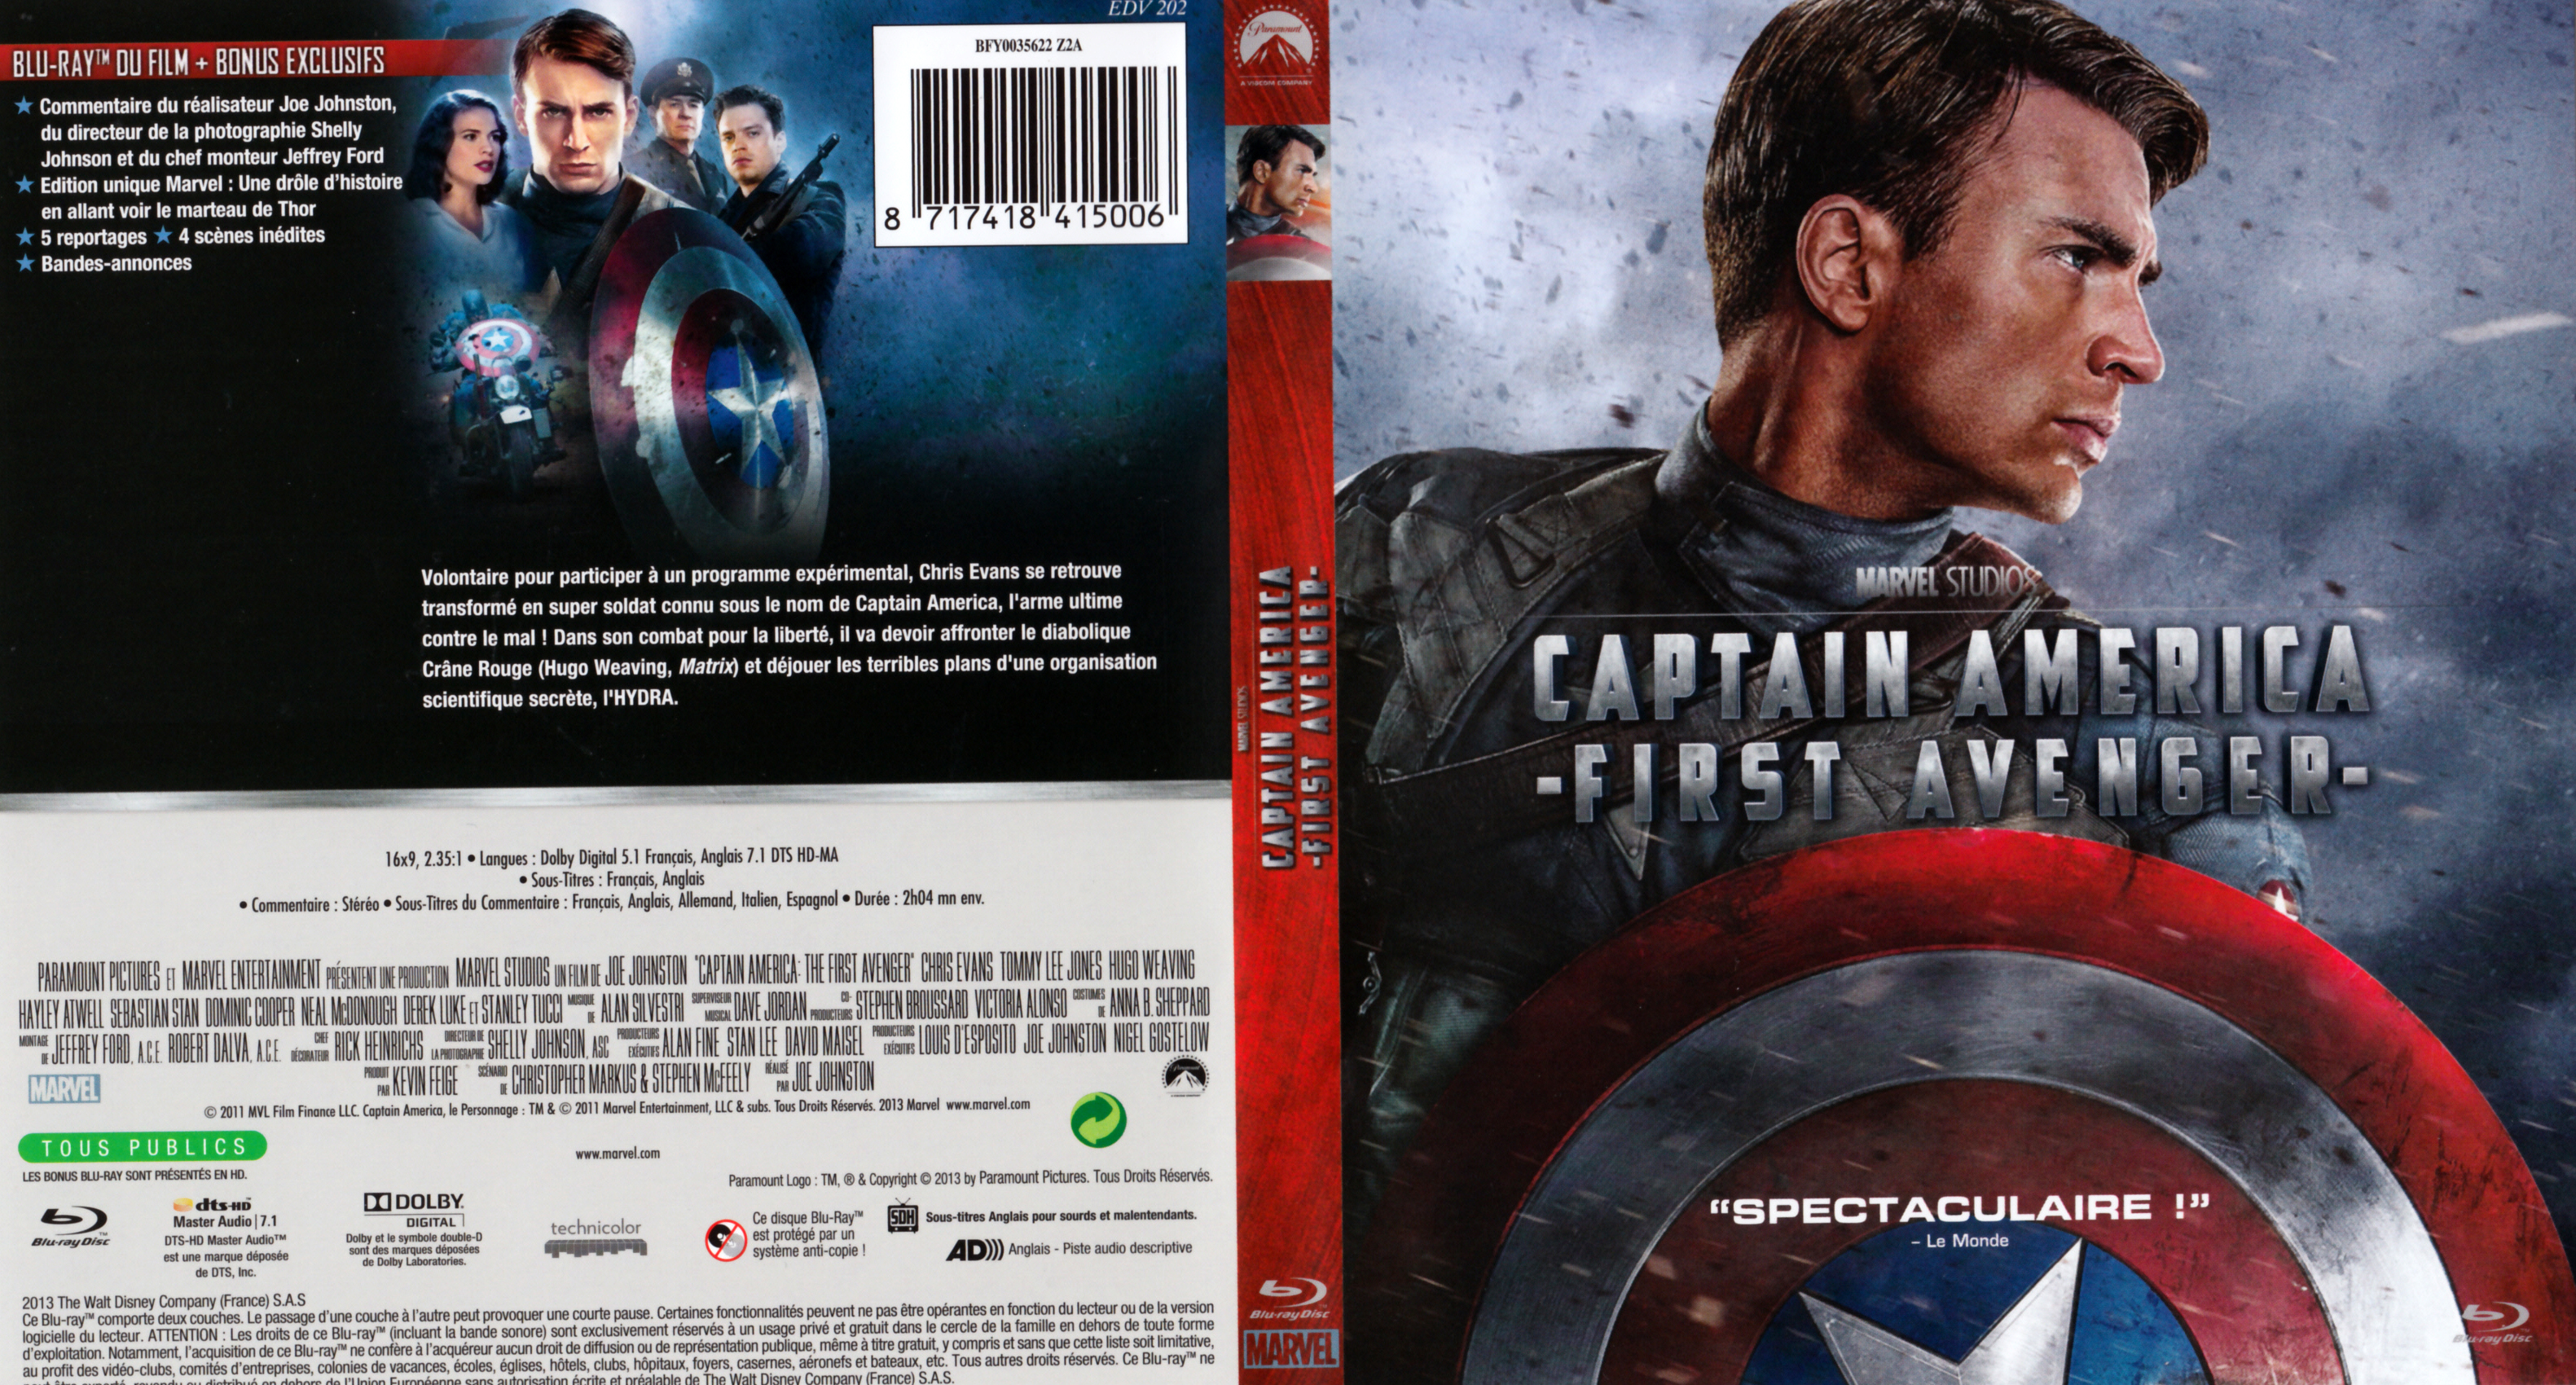 Jaquette DVD Captain America First Avenger (BLU-RAY) v2